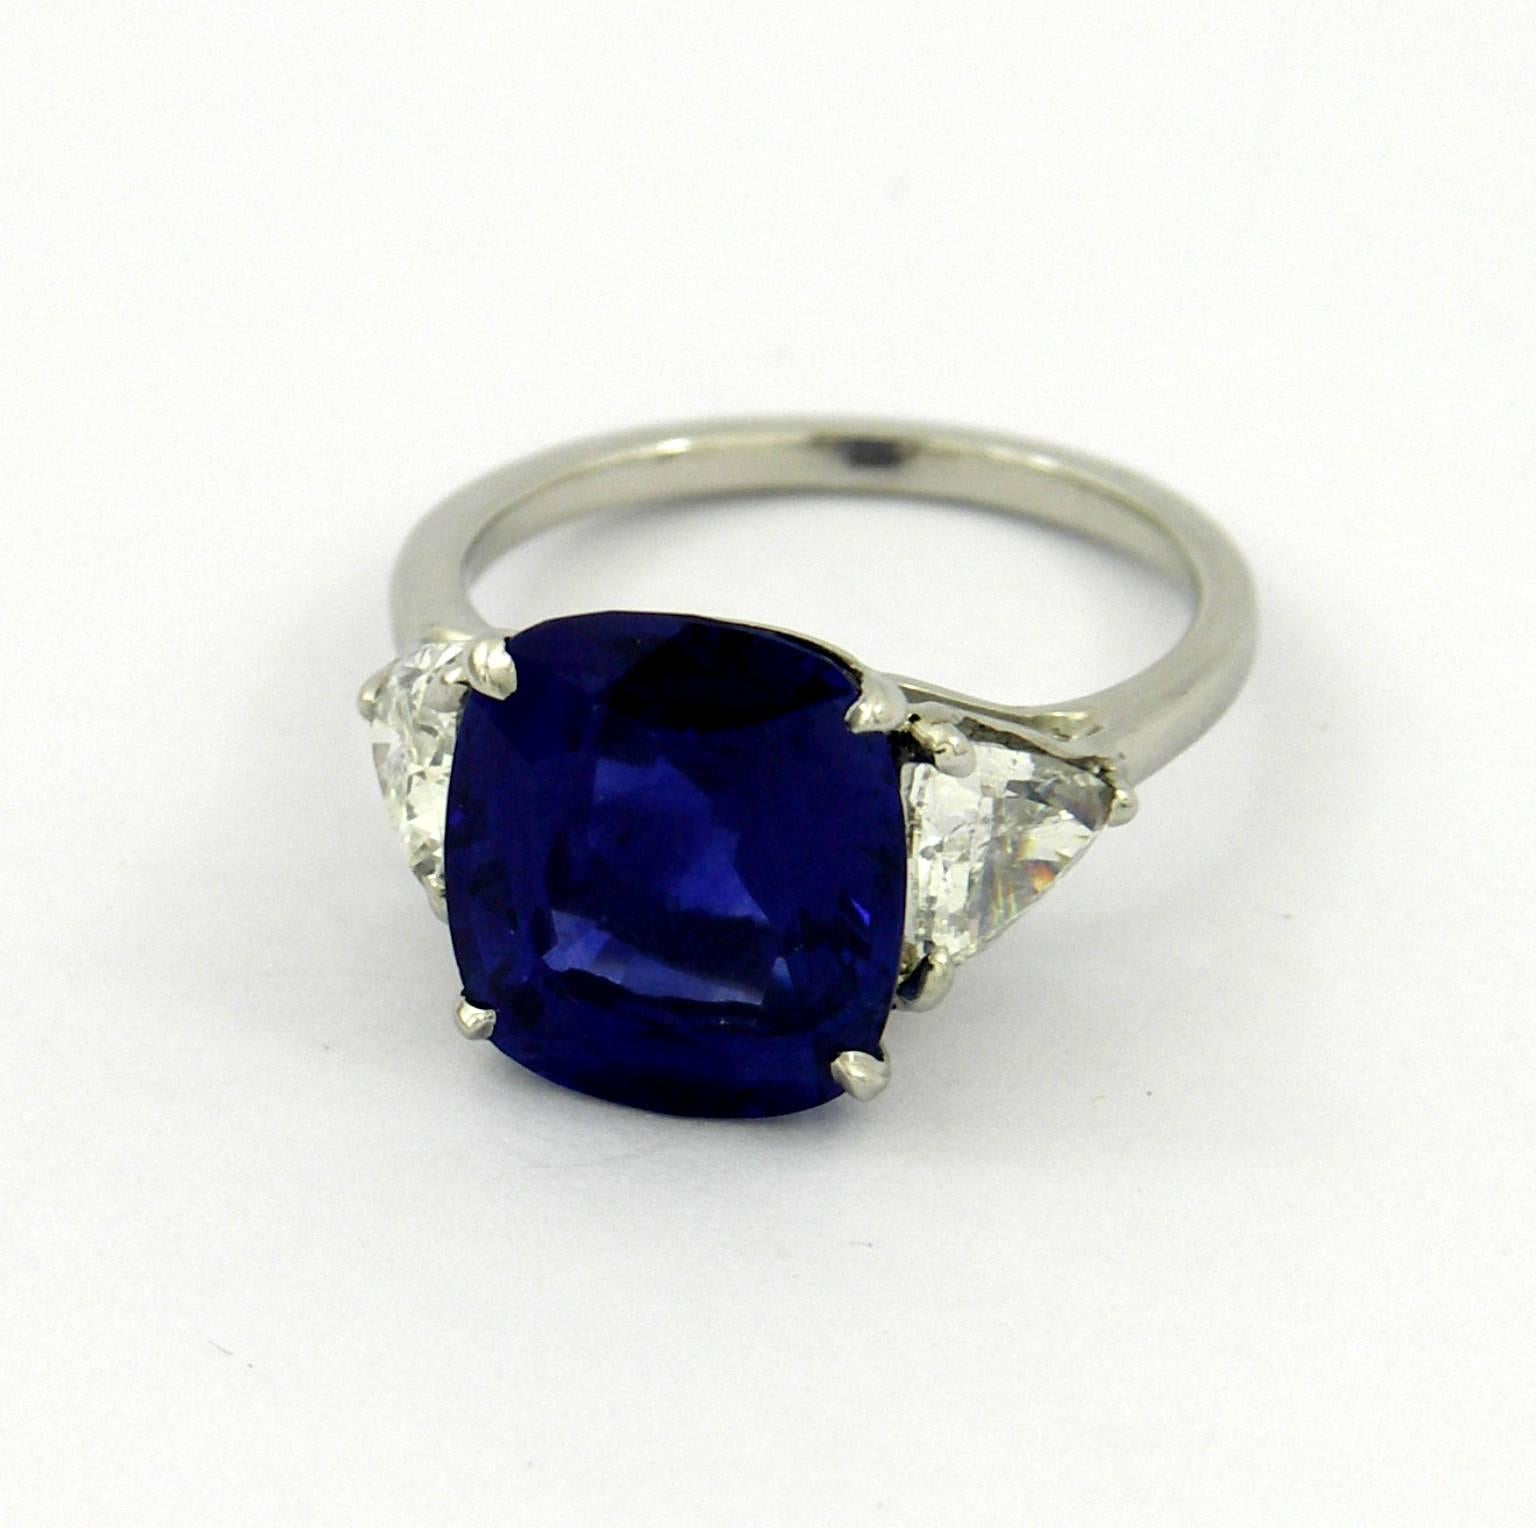 Women's A.G.L. Certified 7.32 Carat Cushion Cut Sapphire Diamond Ring